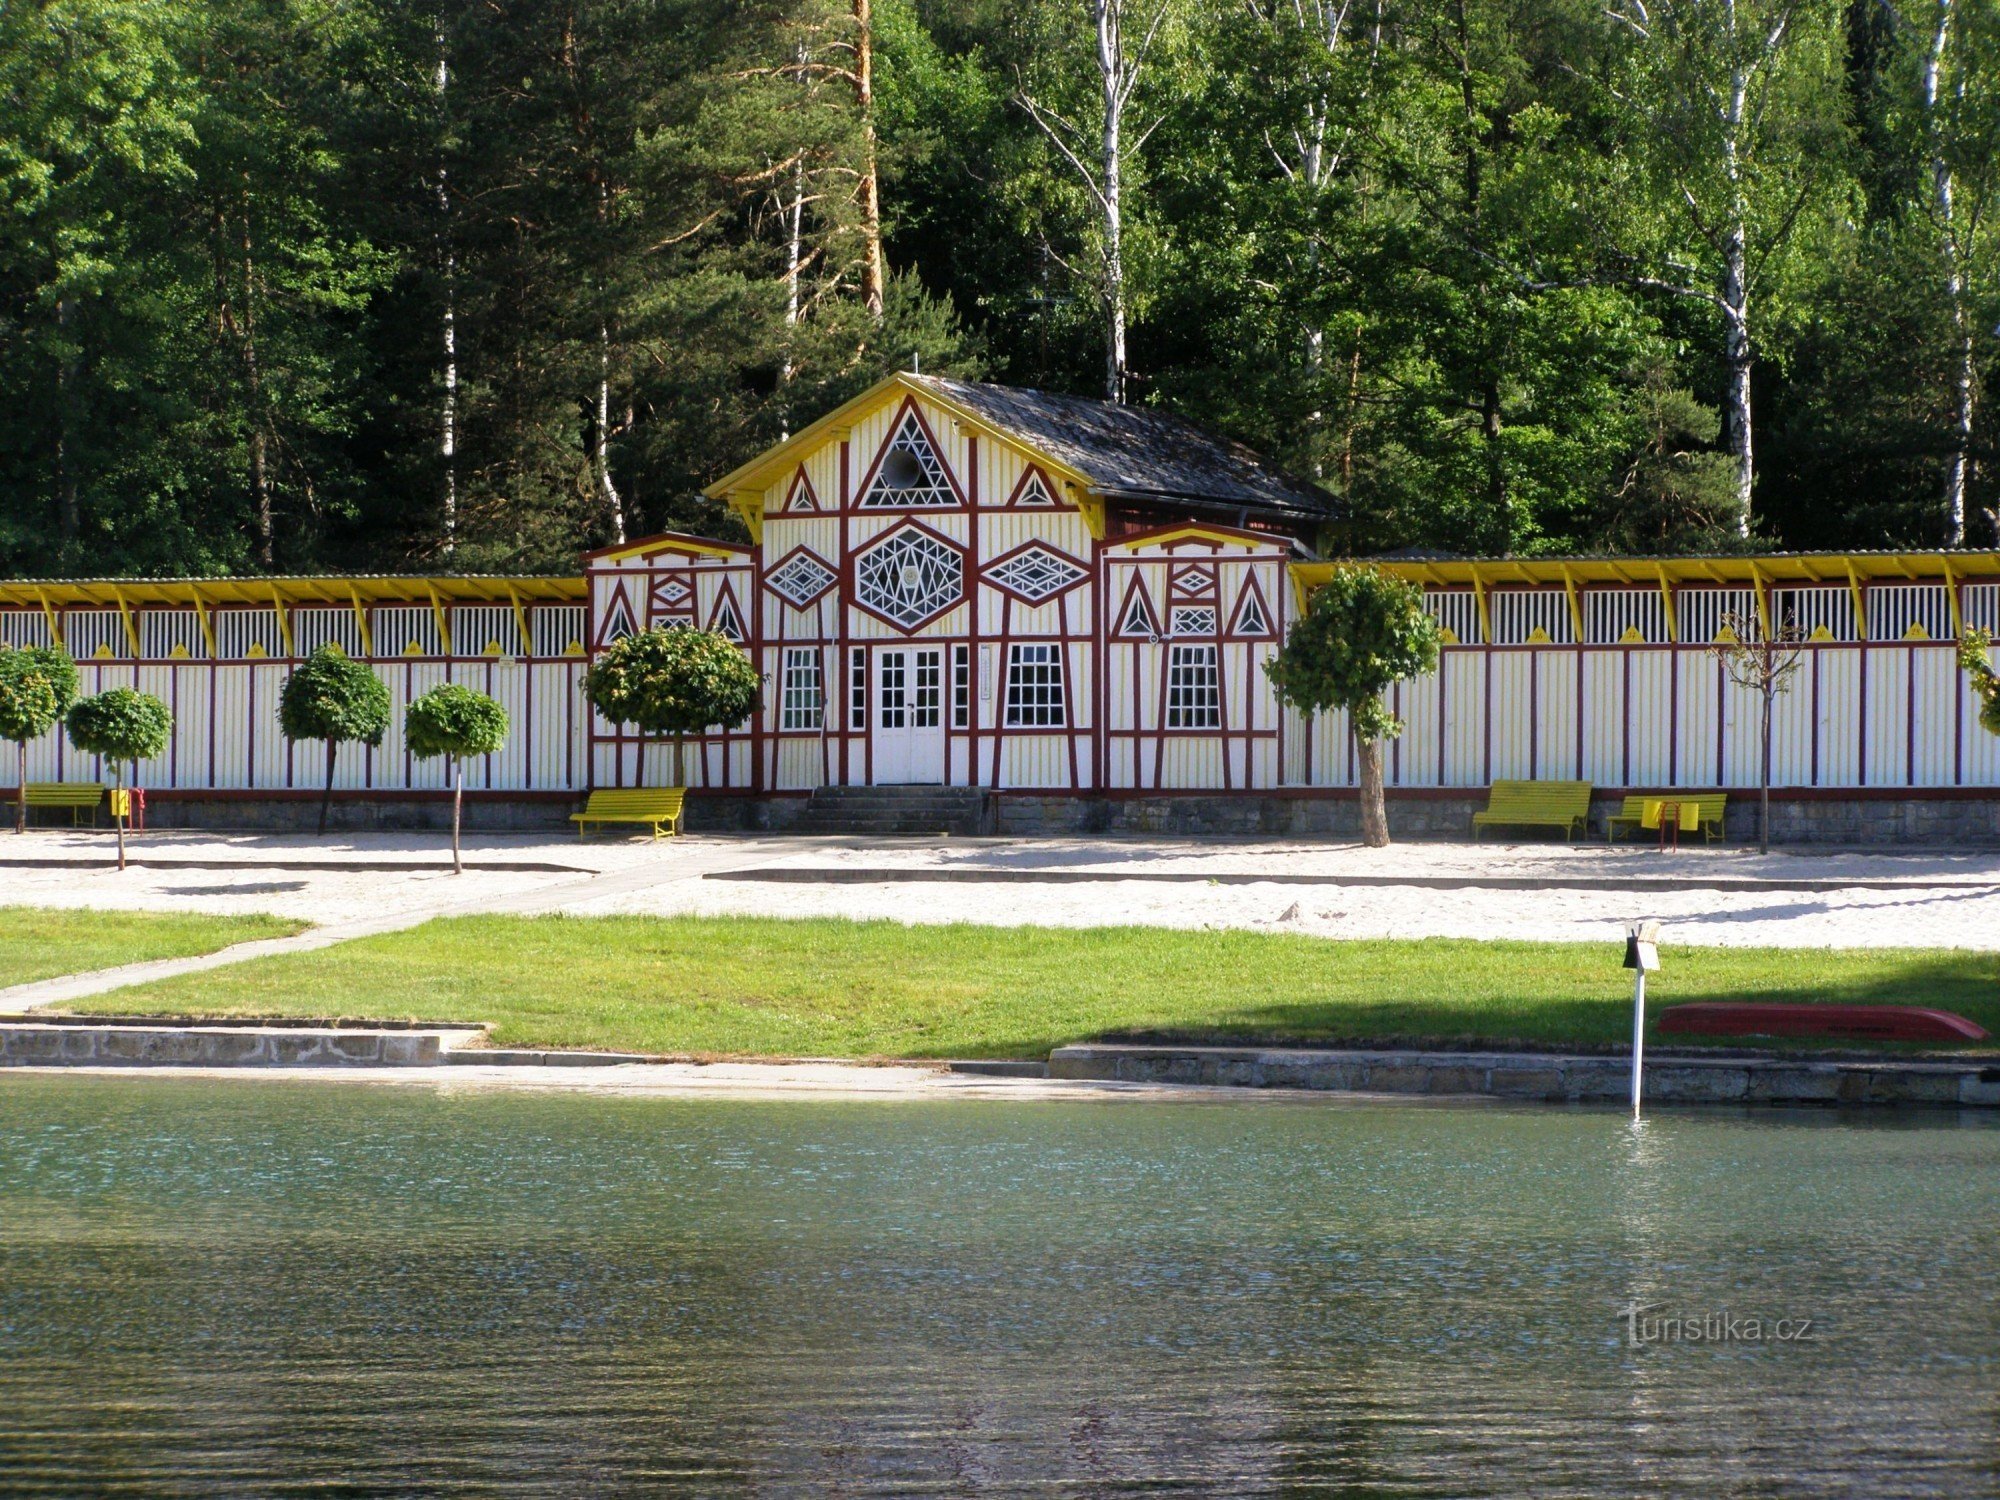 Dachova swimming pool